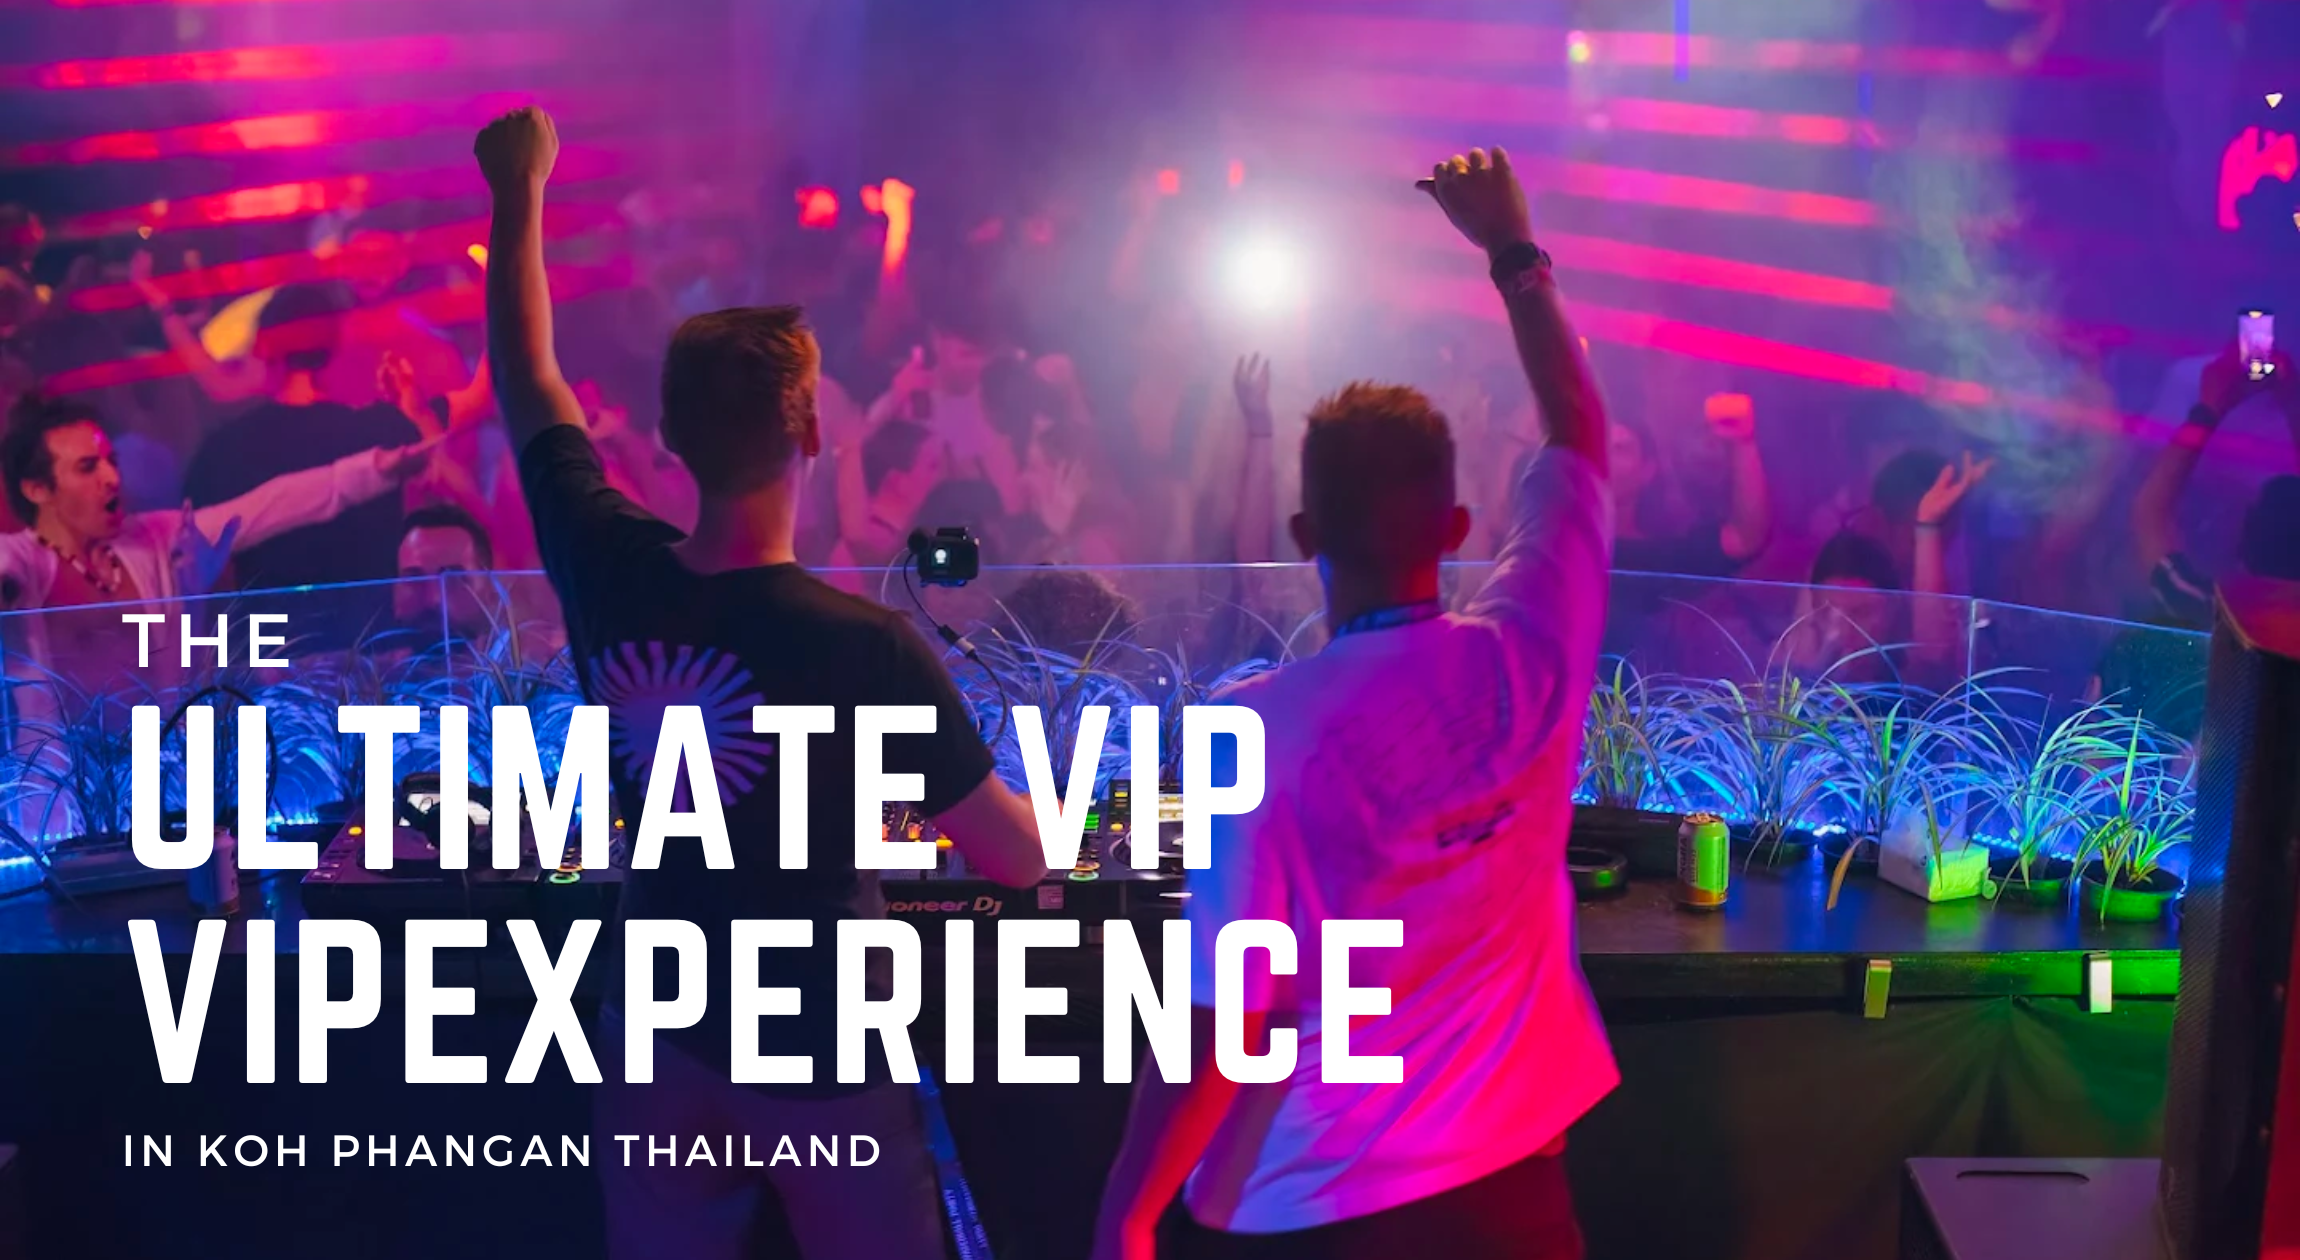 The Ultimate VIP Experience at Waterfall Party, Koh Phangan